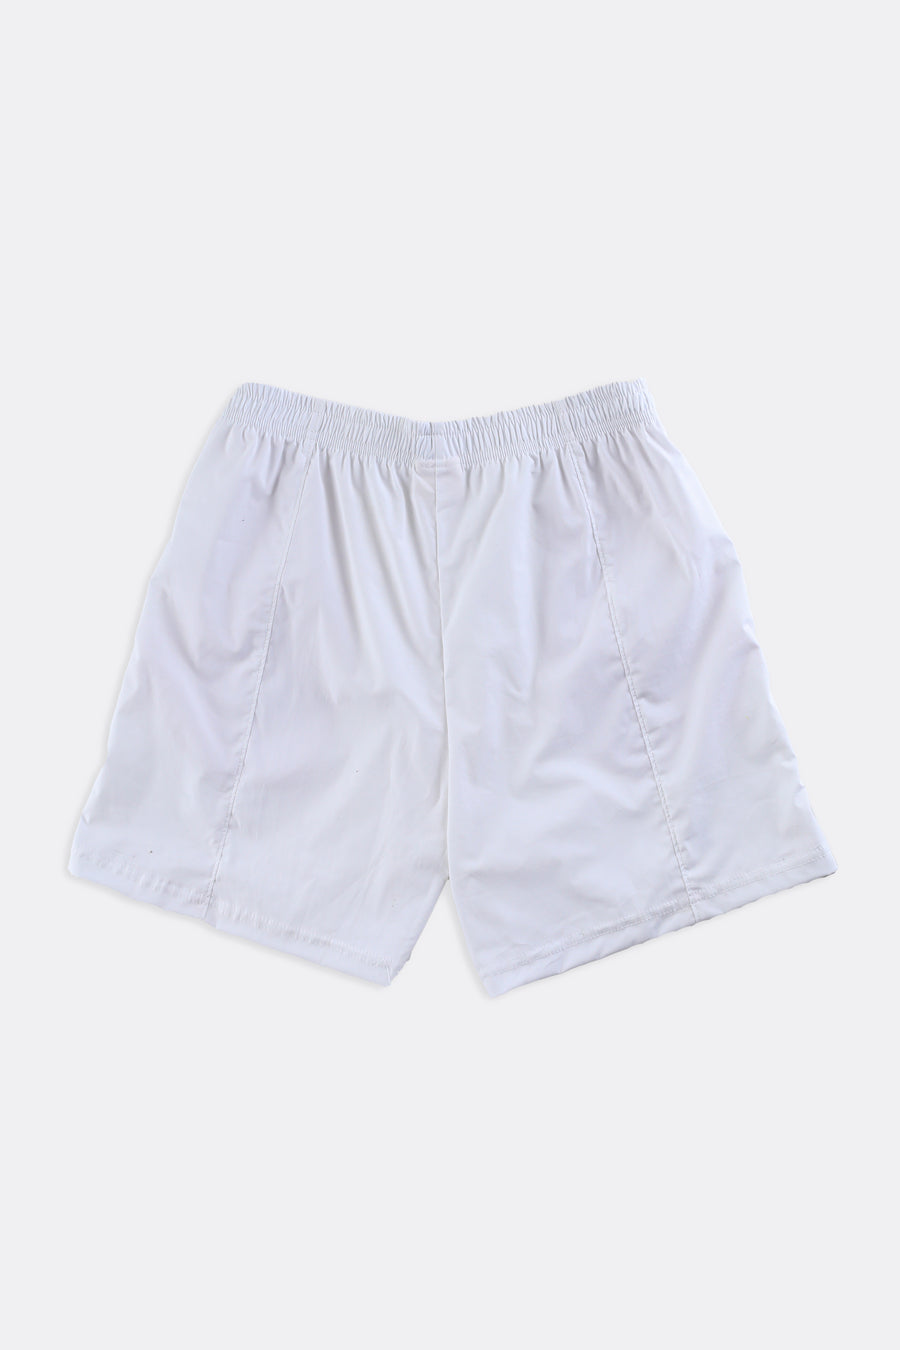 Unisex Rework Polo Oxford Boxer Shorts - XS, S, M, L, XL